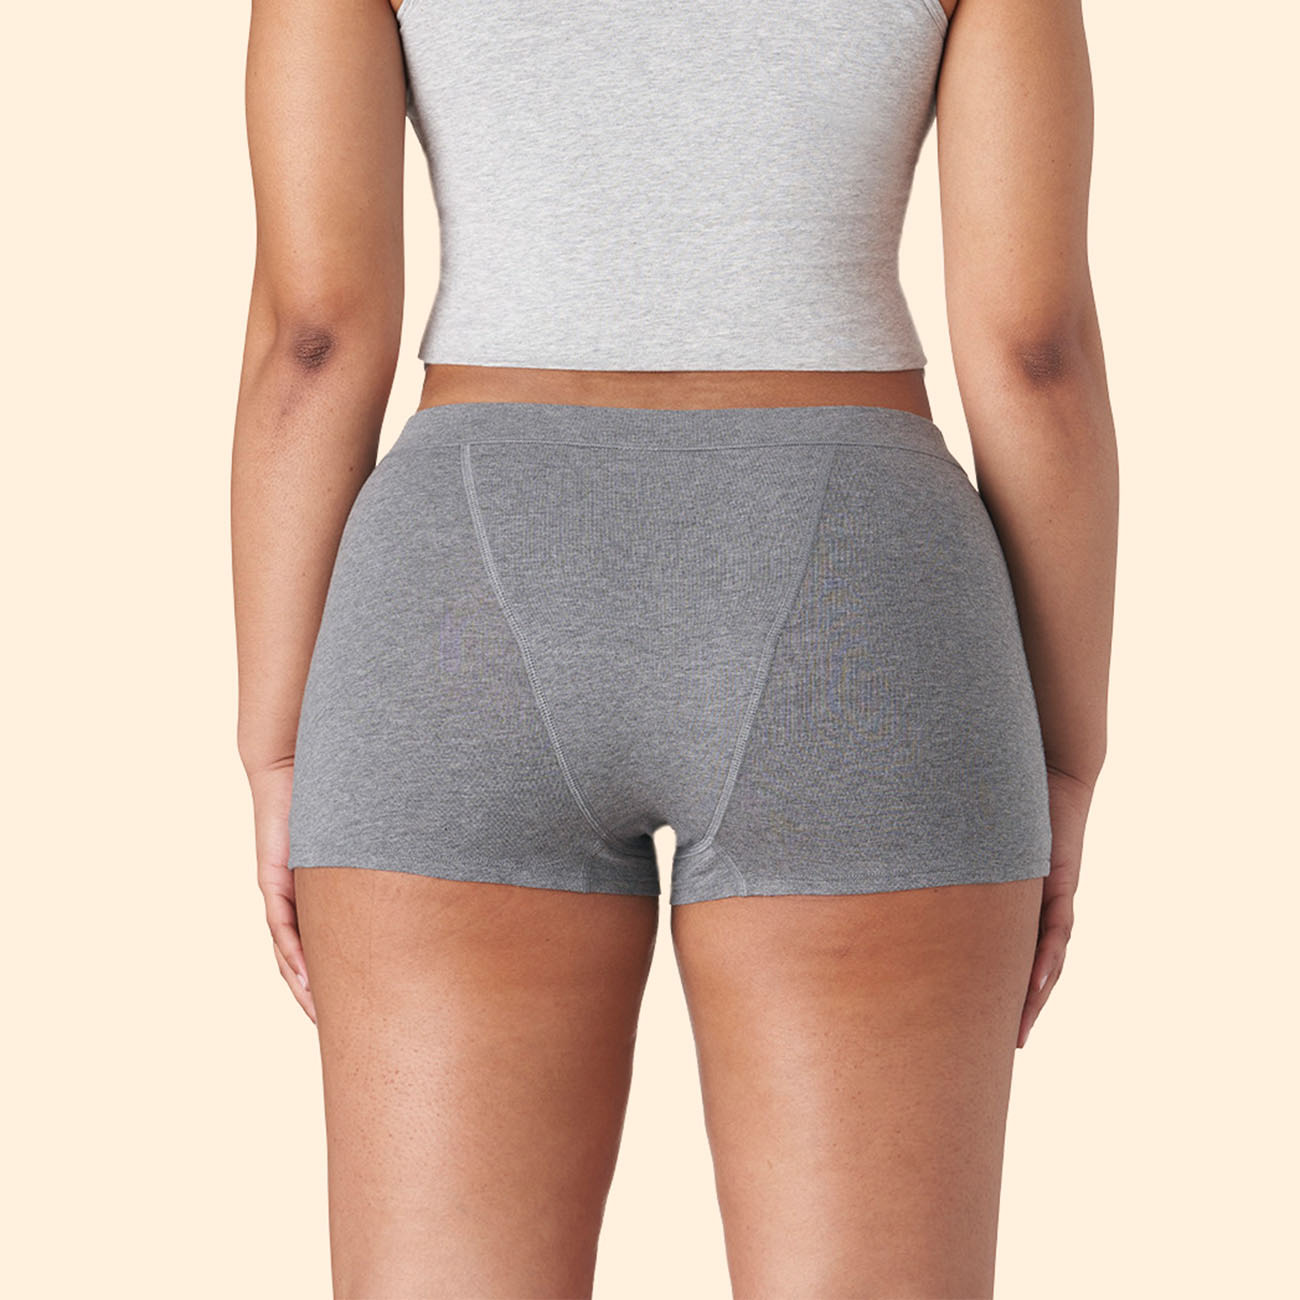 Players Underwear Mid-Length Brief Singles 100% Cotton 2X, 3X, 4X